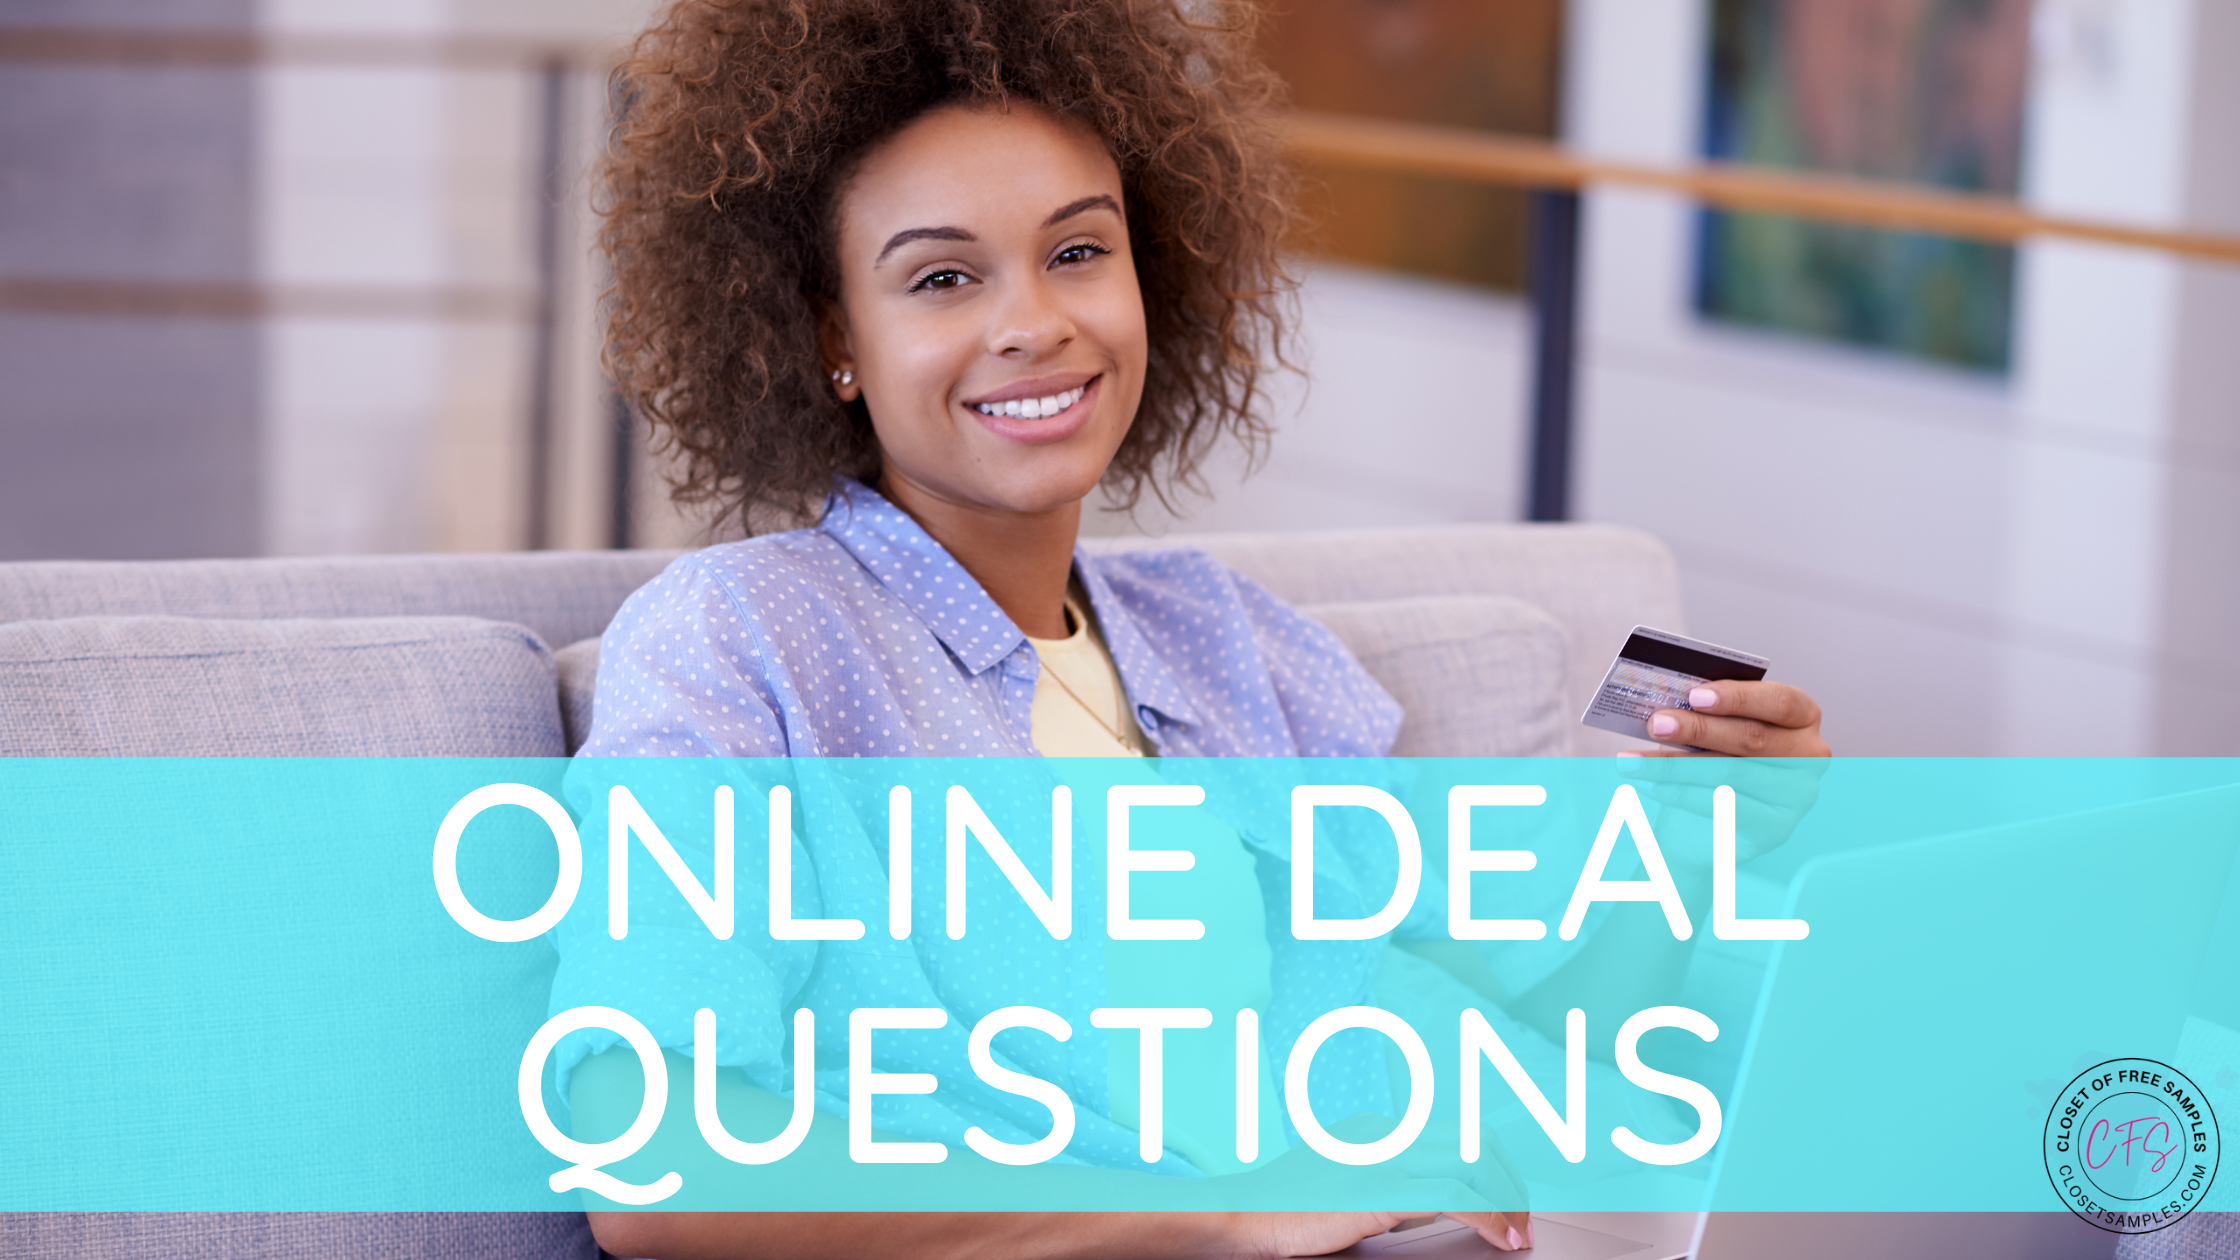 The-Ultimate-Deals-Finding-FAQ-Closetsamples-Deal-Finder-online-deal-questions.png